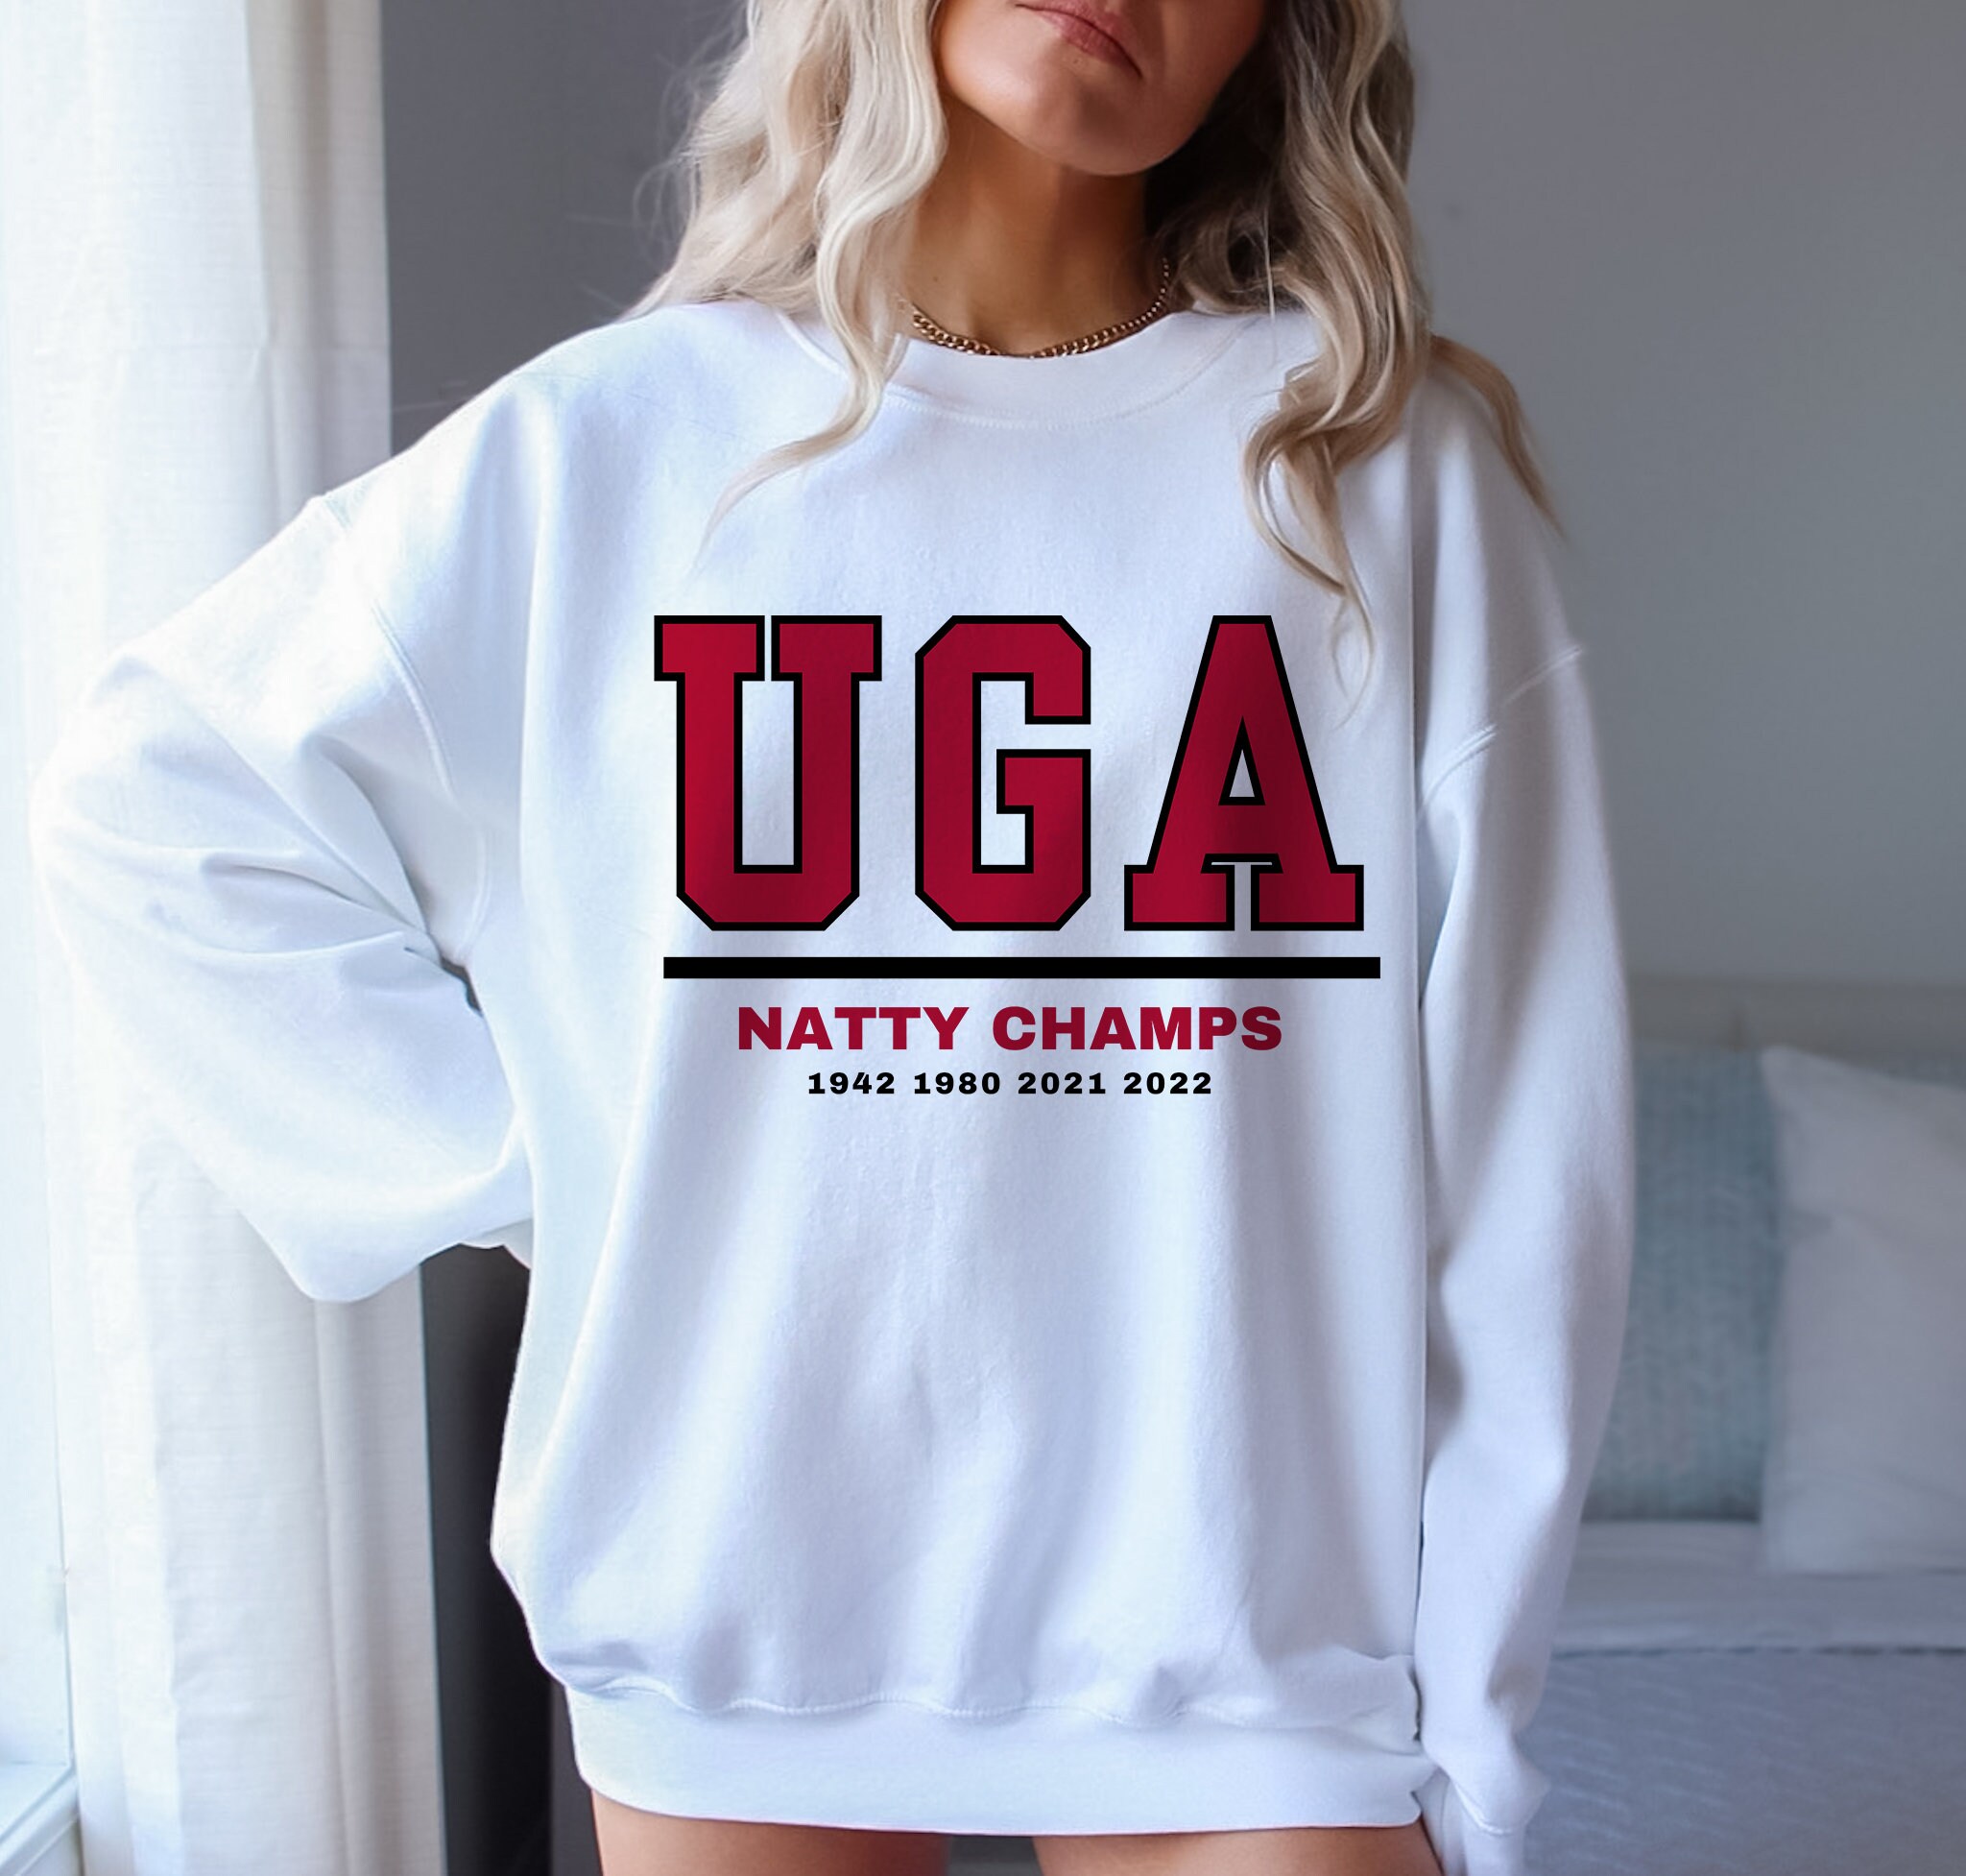 2021 Champions UGA Georgia Bulldogs Atlanta Braves shirt,Sweater